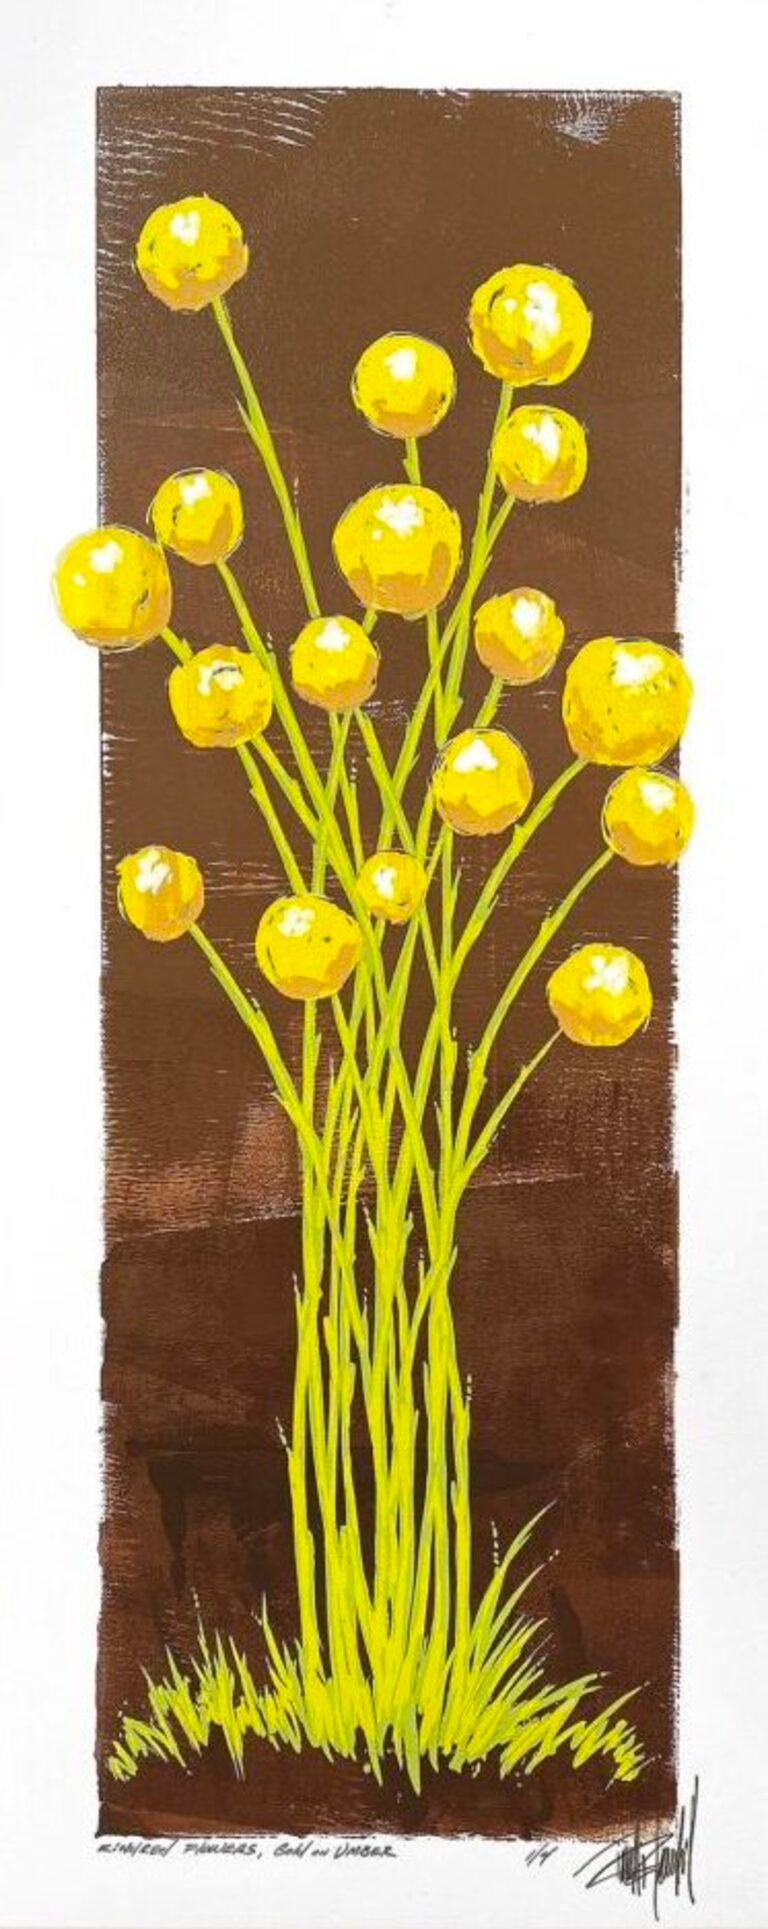 Terrell Thornhill  Landscape Print - Kindred Flowers, Gold on Umber (3/4)